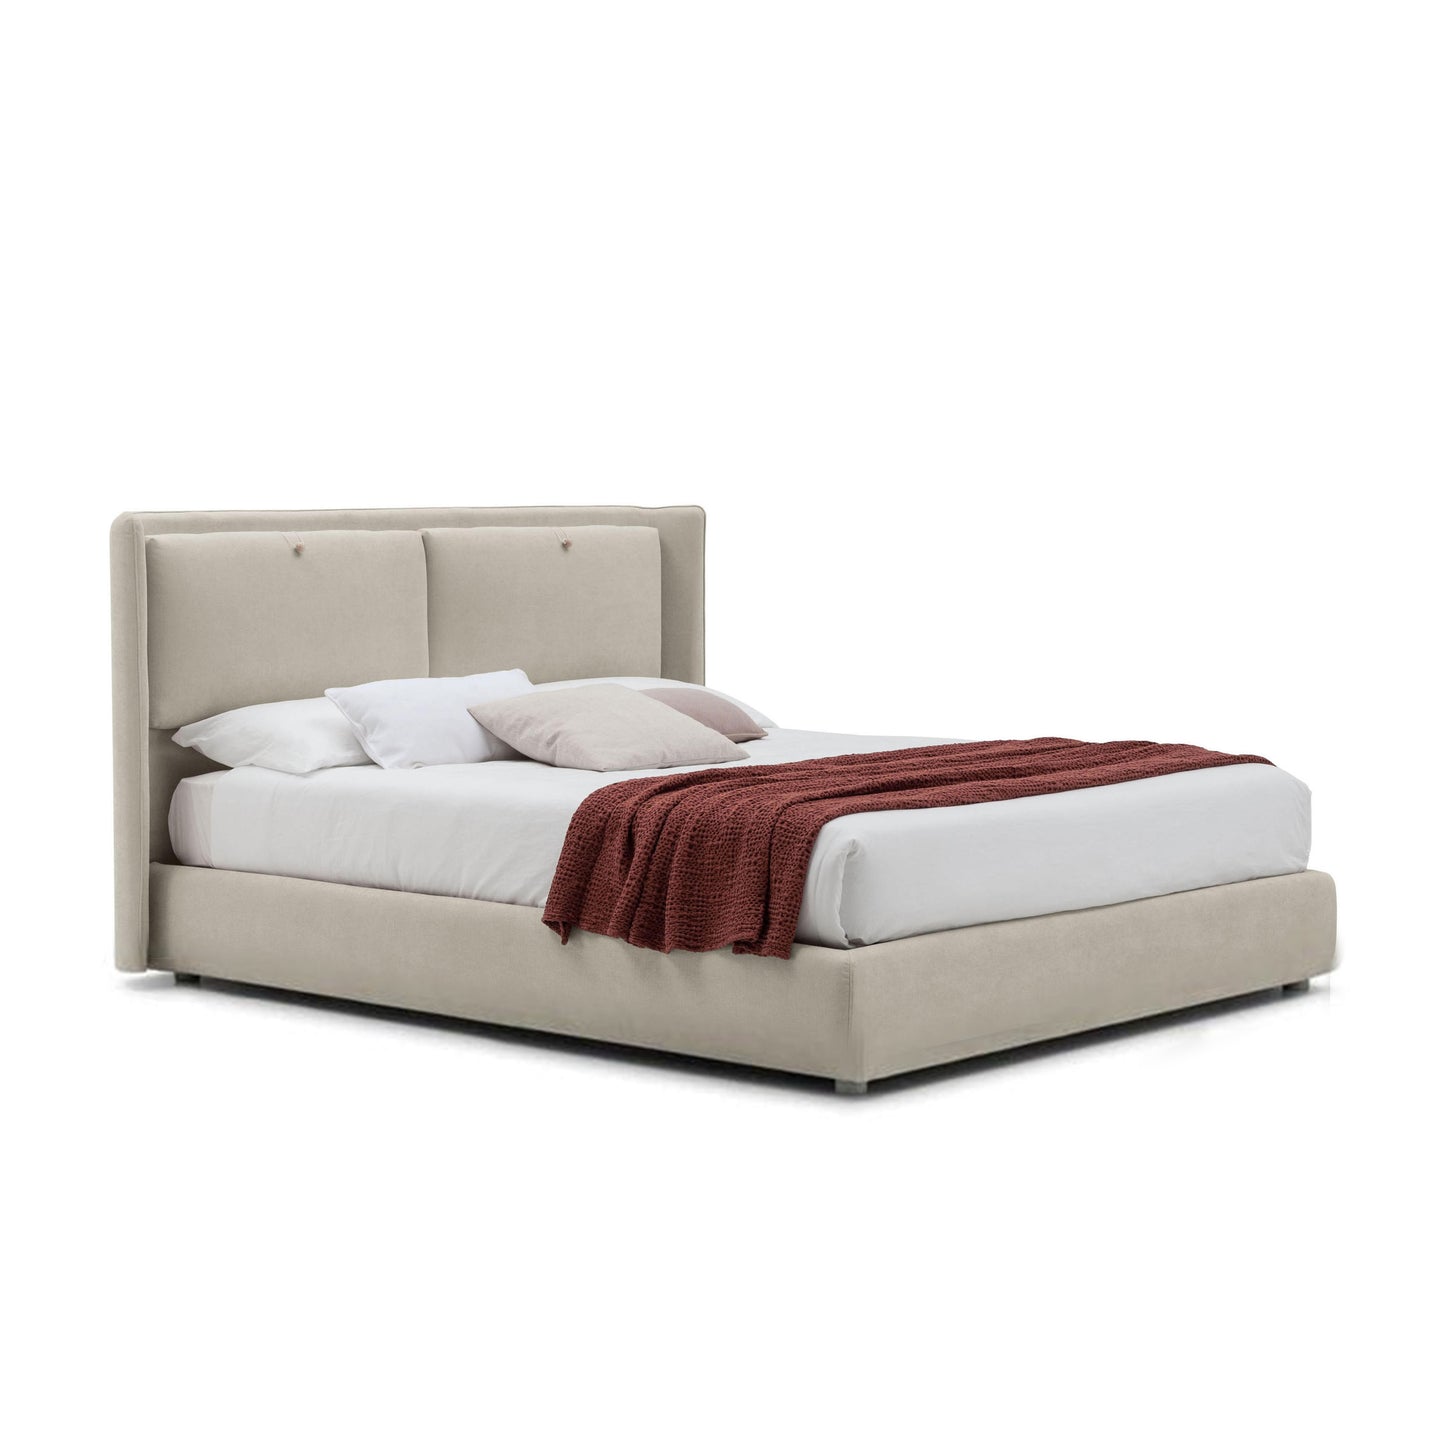 سرير - مقاسات متعددة- TEM137